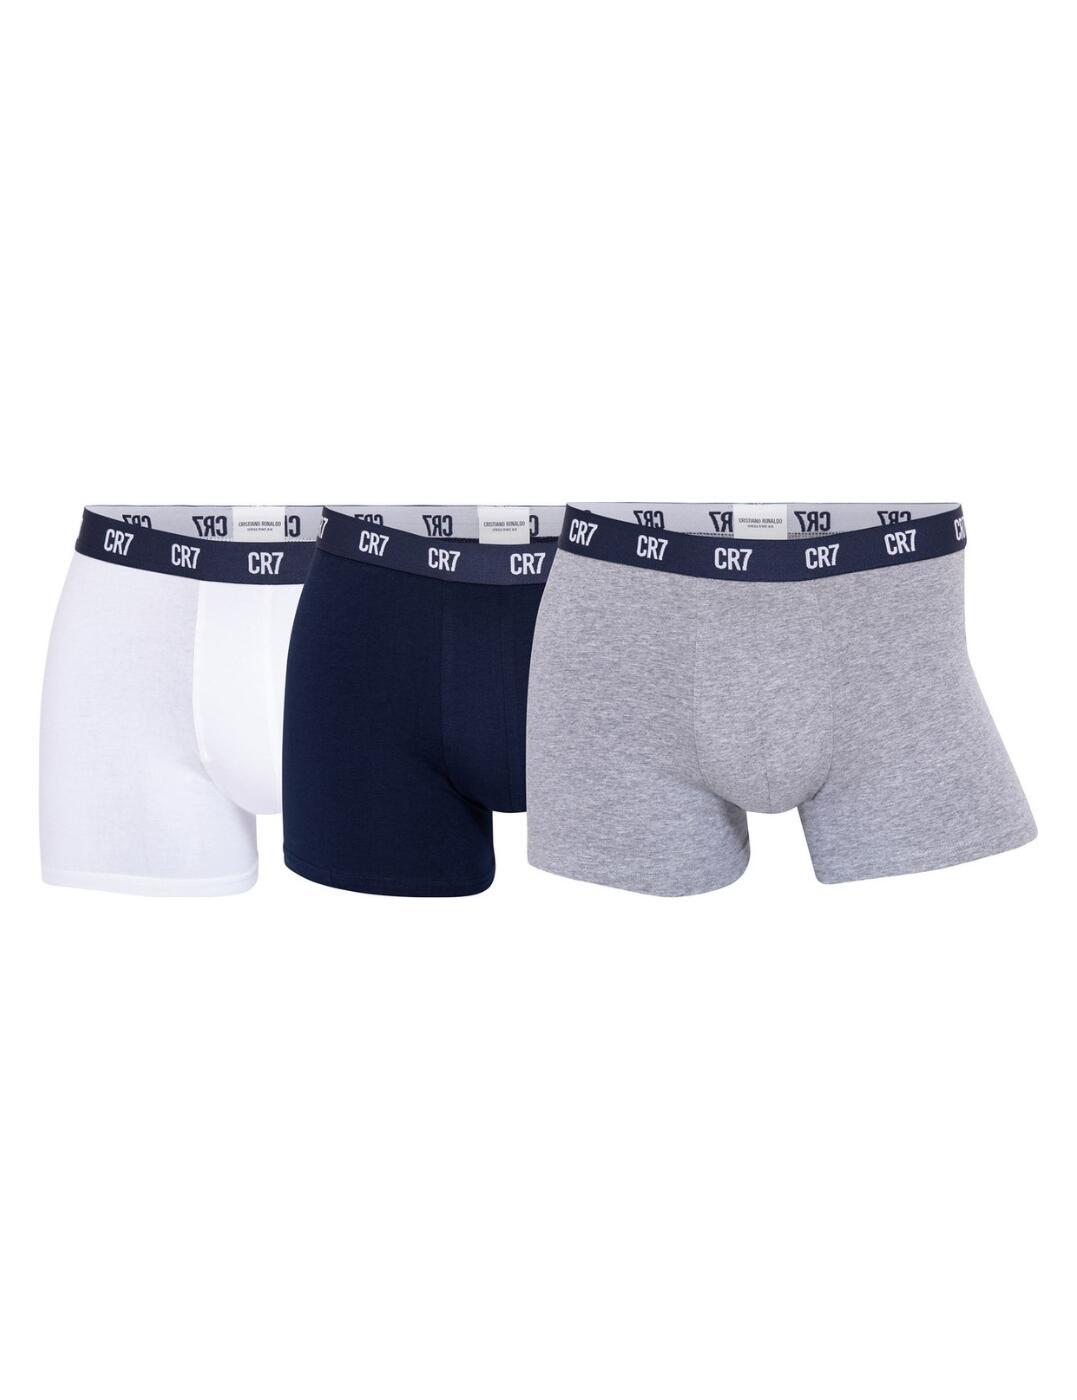 Cristiano Ronaldo CR7 Basic 3-Pack Cotton Briefs Men's Underwear XL